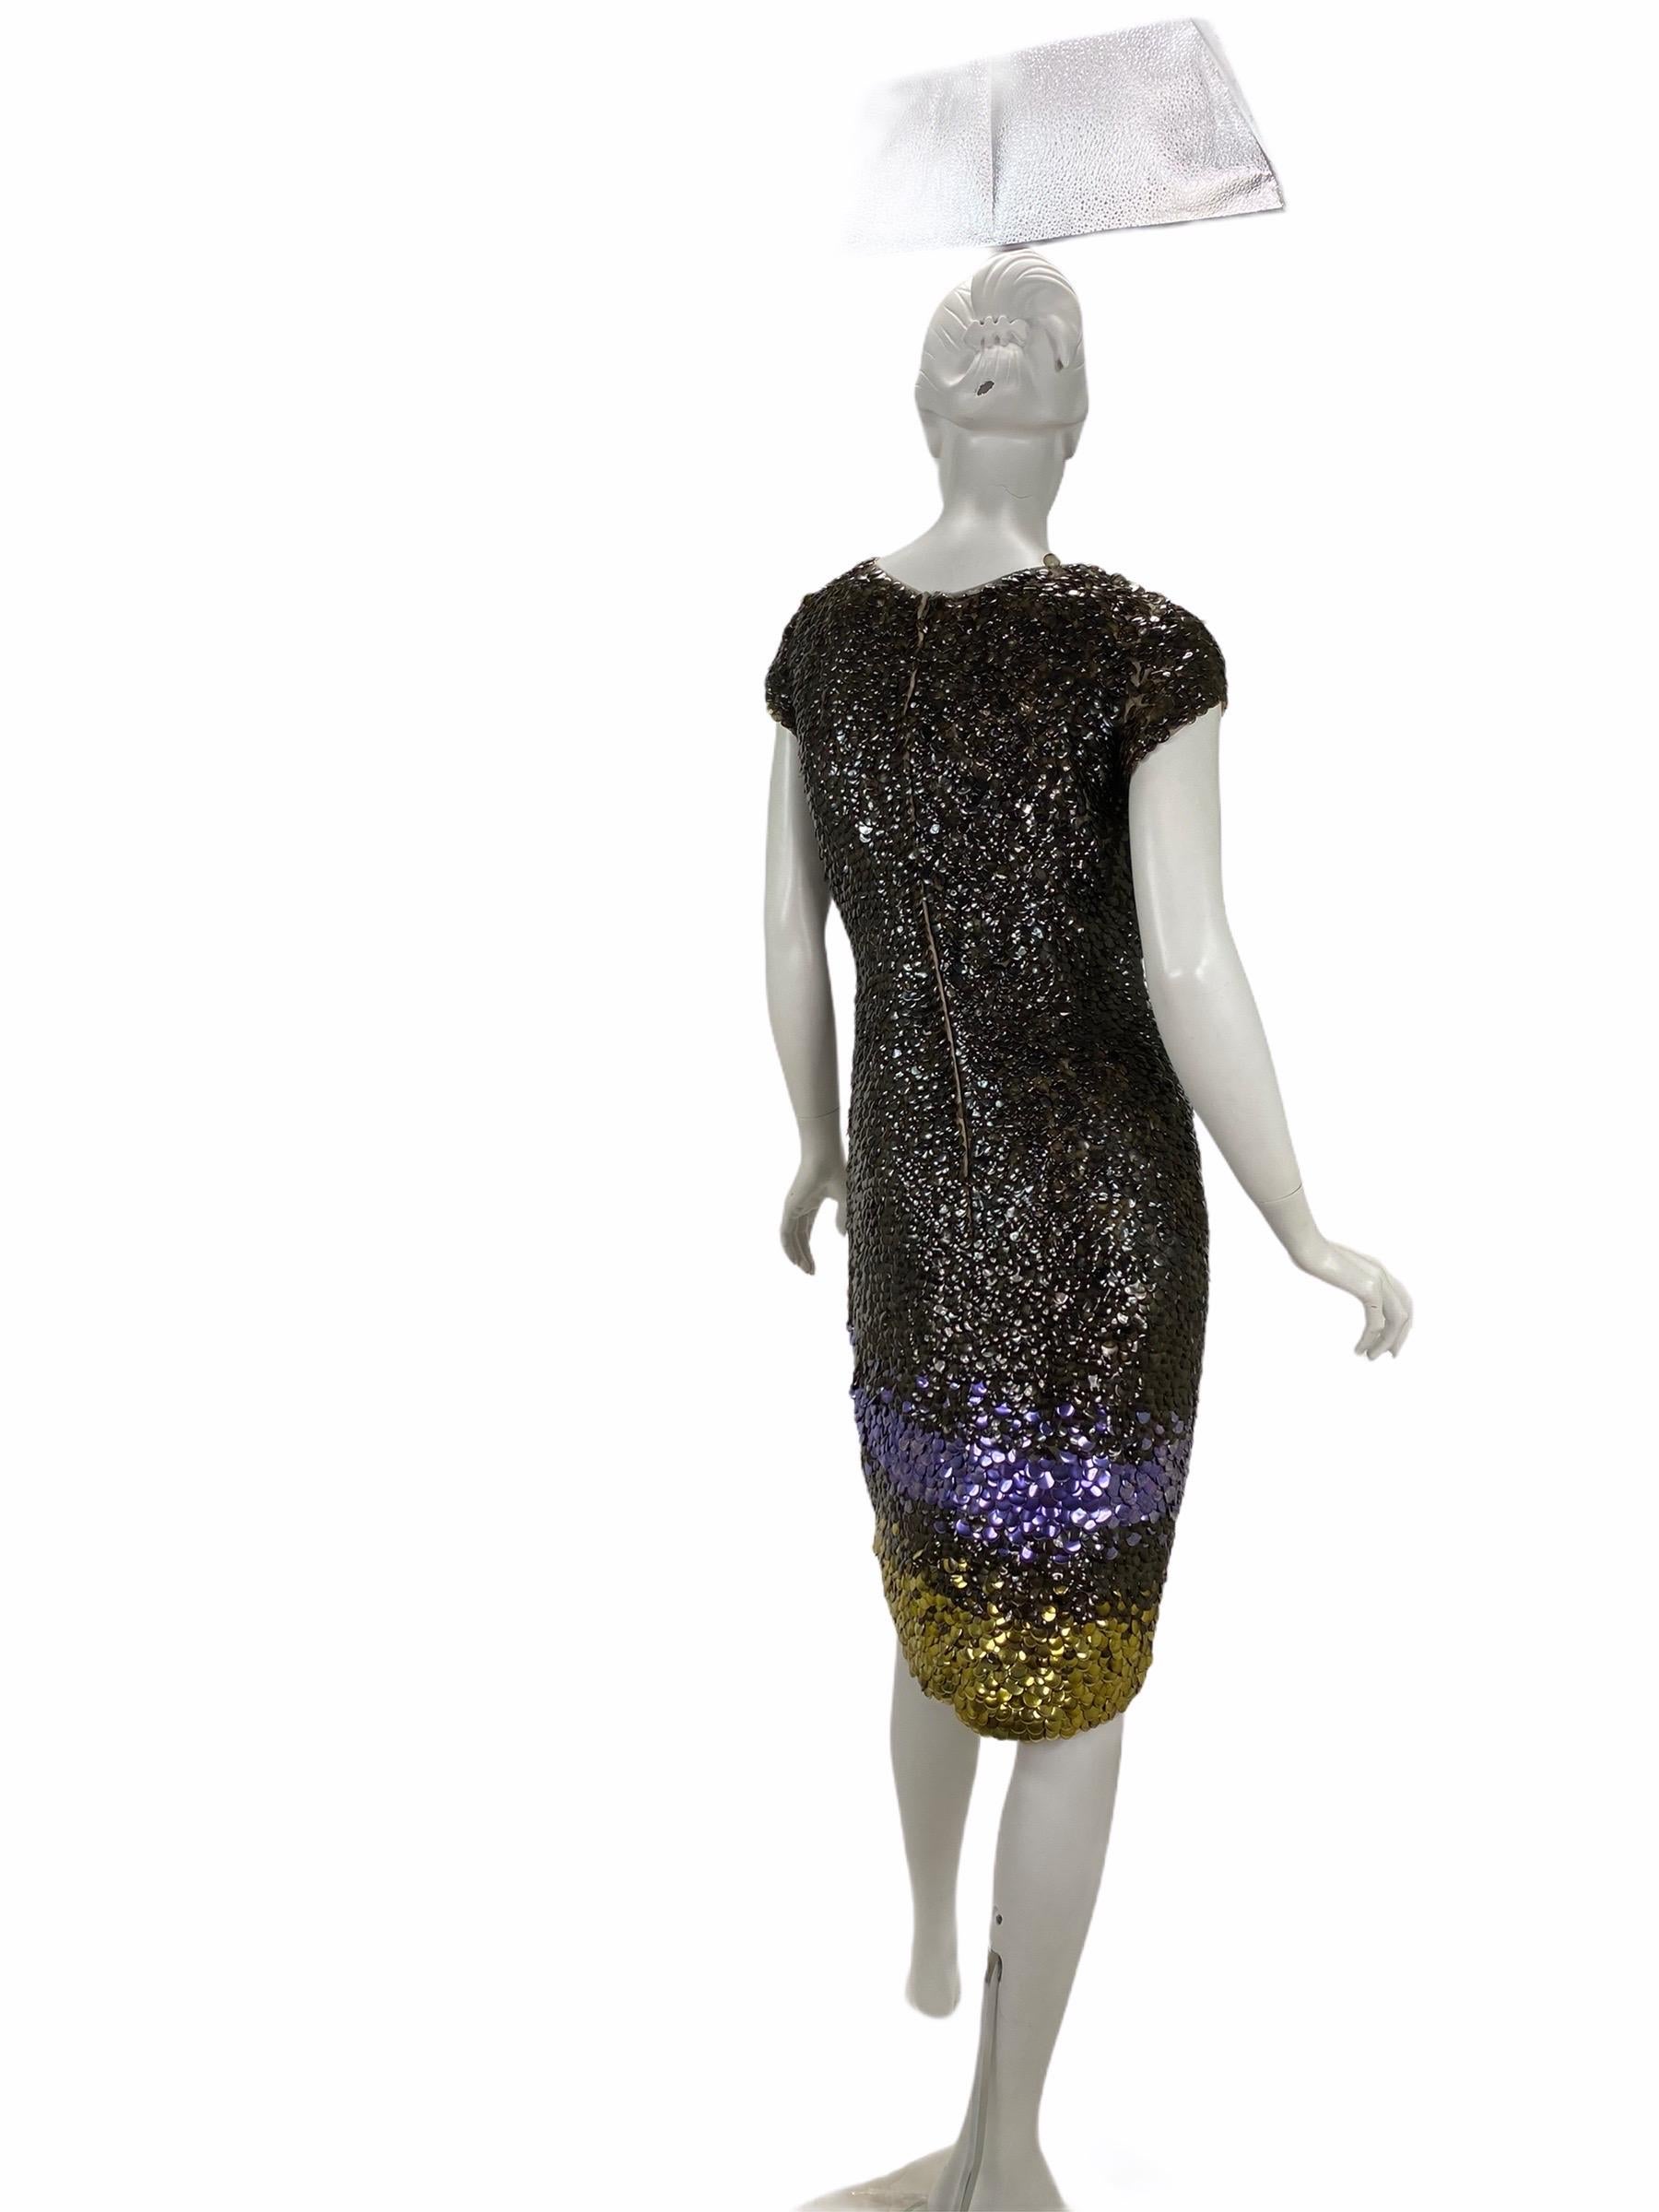 New Oscar de la Renta Sequin-Sprayed Silk Cocktail Dress US 6 For Sale 1